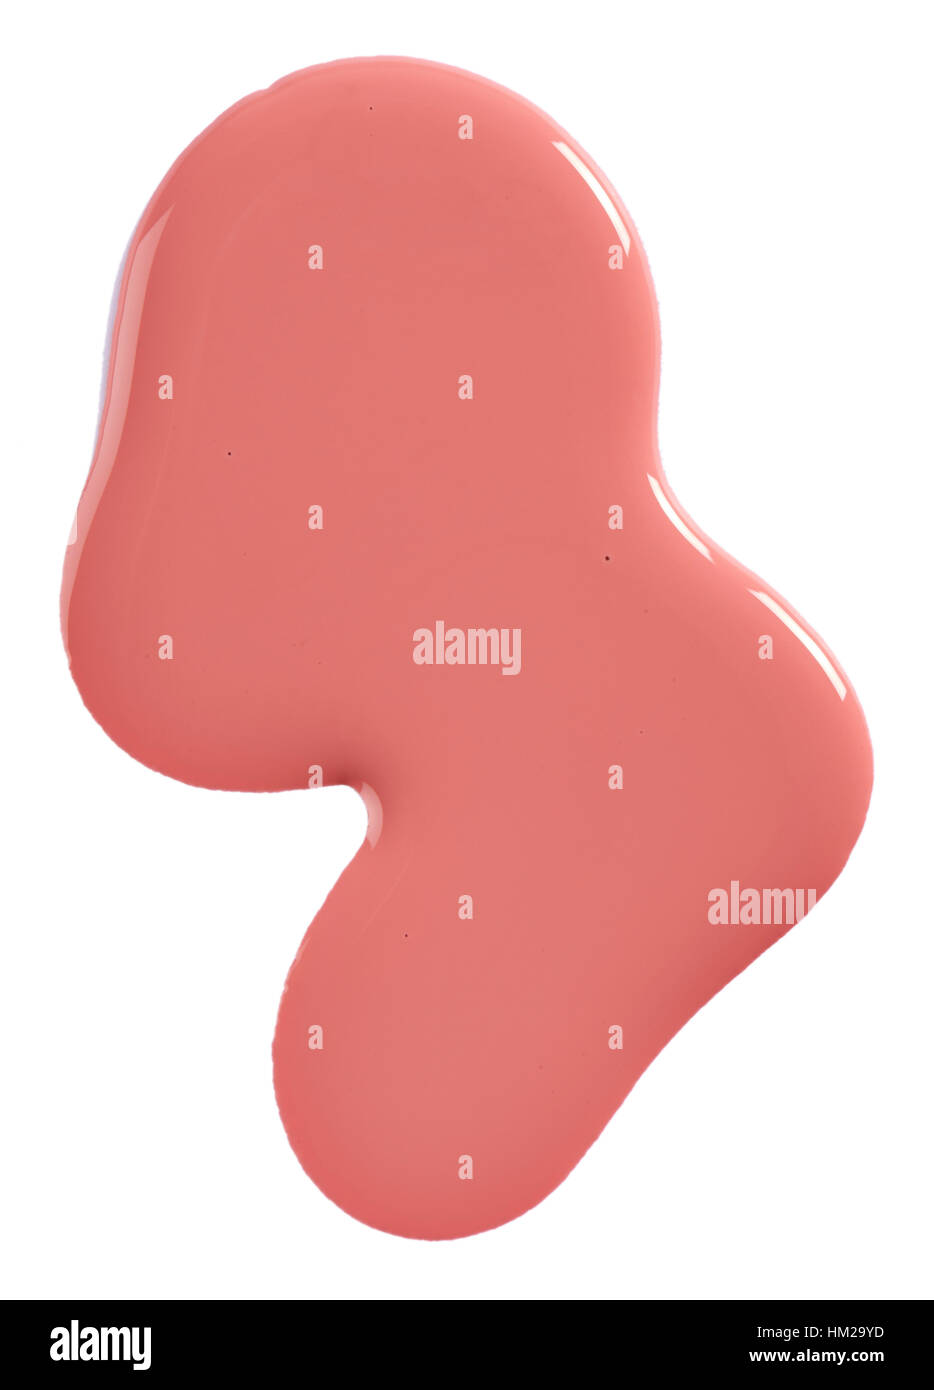 A cut out beauty image of a sample of pink nail polish or varnish. Stock Photo